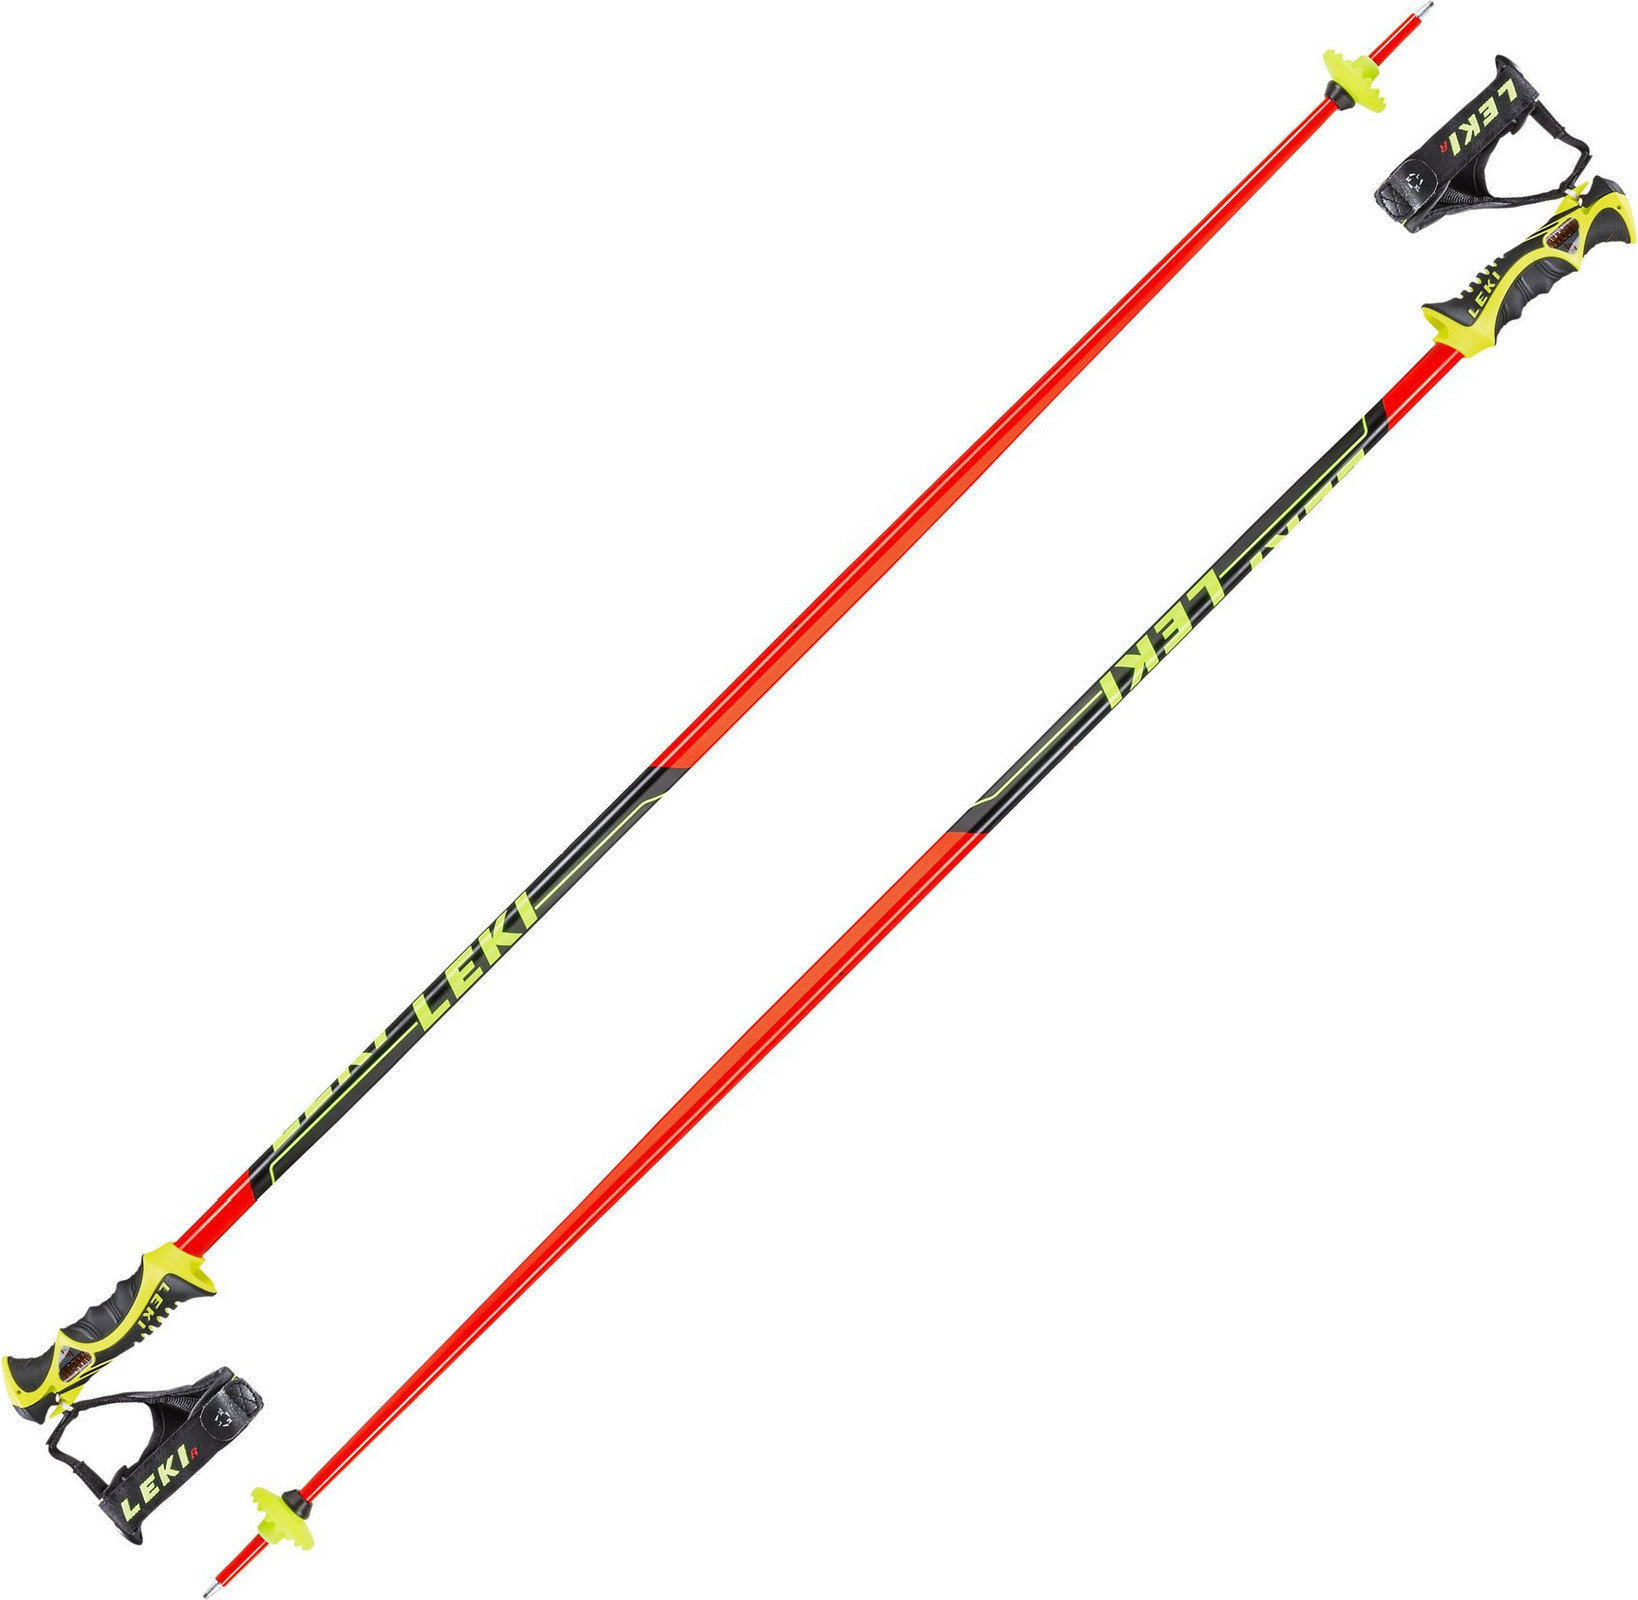 Ski Poles Leki Worldcup Racing SL Neonred/Black/White/Yellow 125 cm Ski Poles